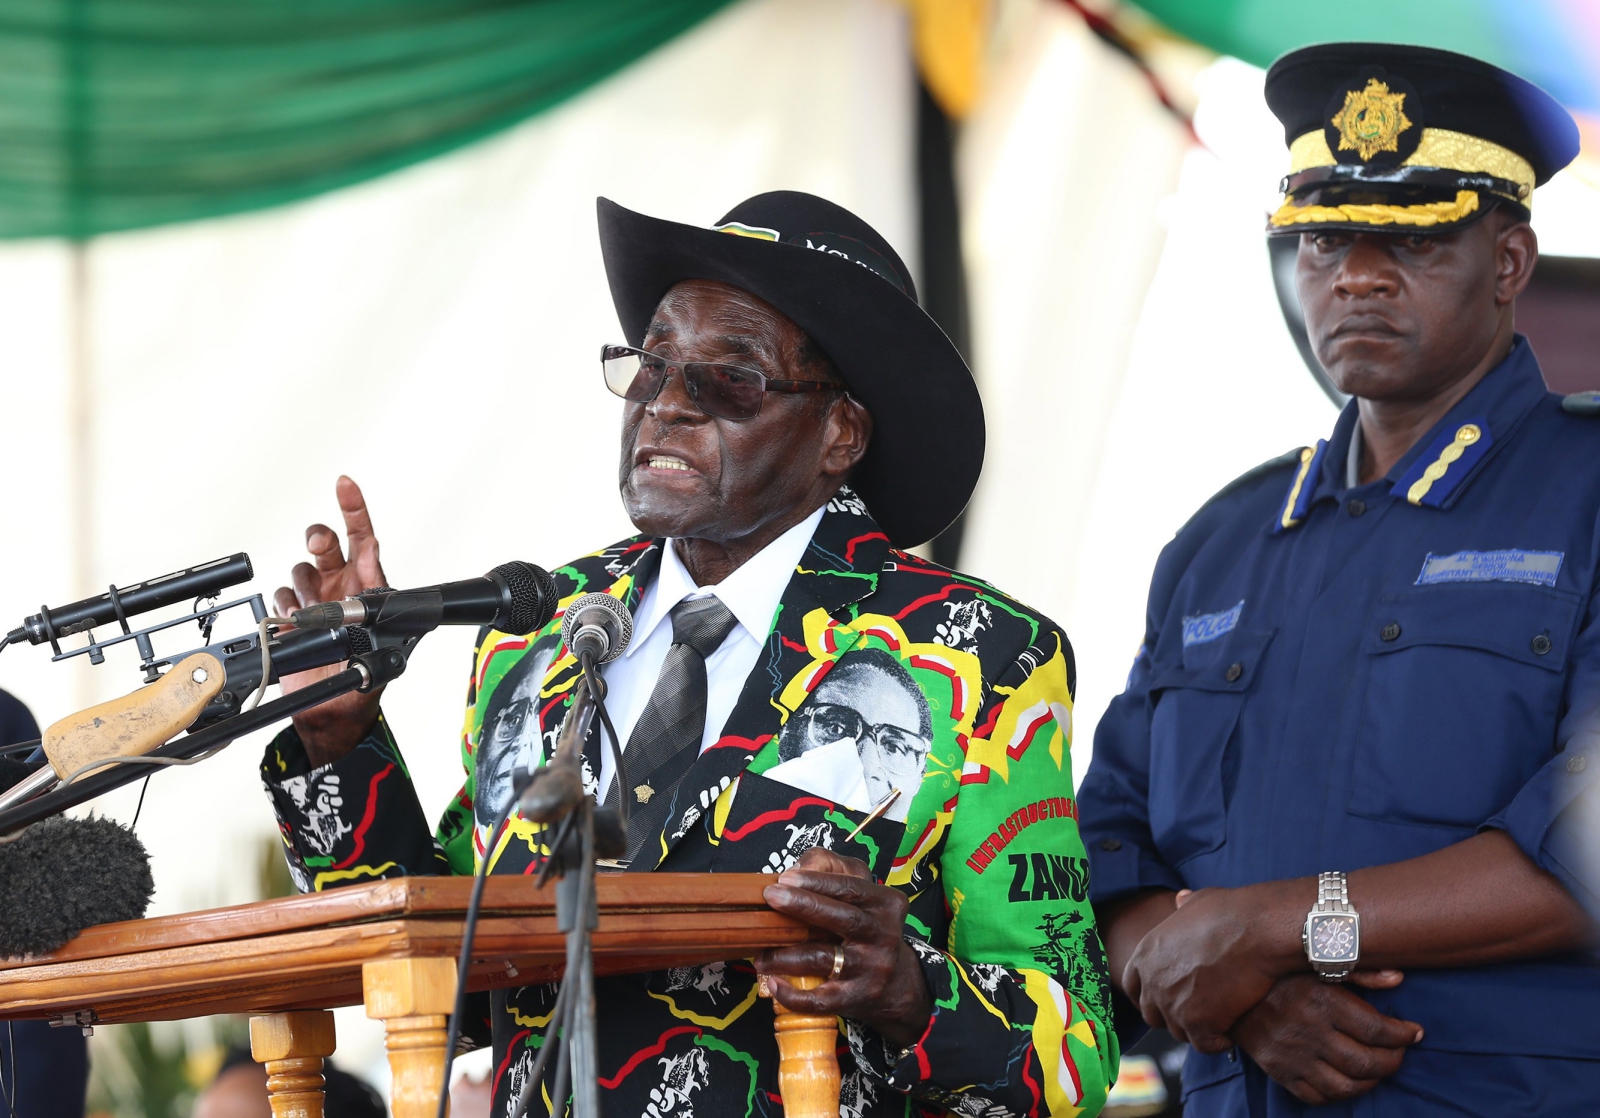 93 urodziny prezydenta Zimbabwe Robert Mugabe (po lewej).